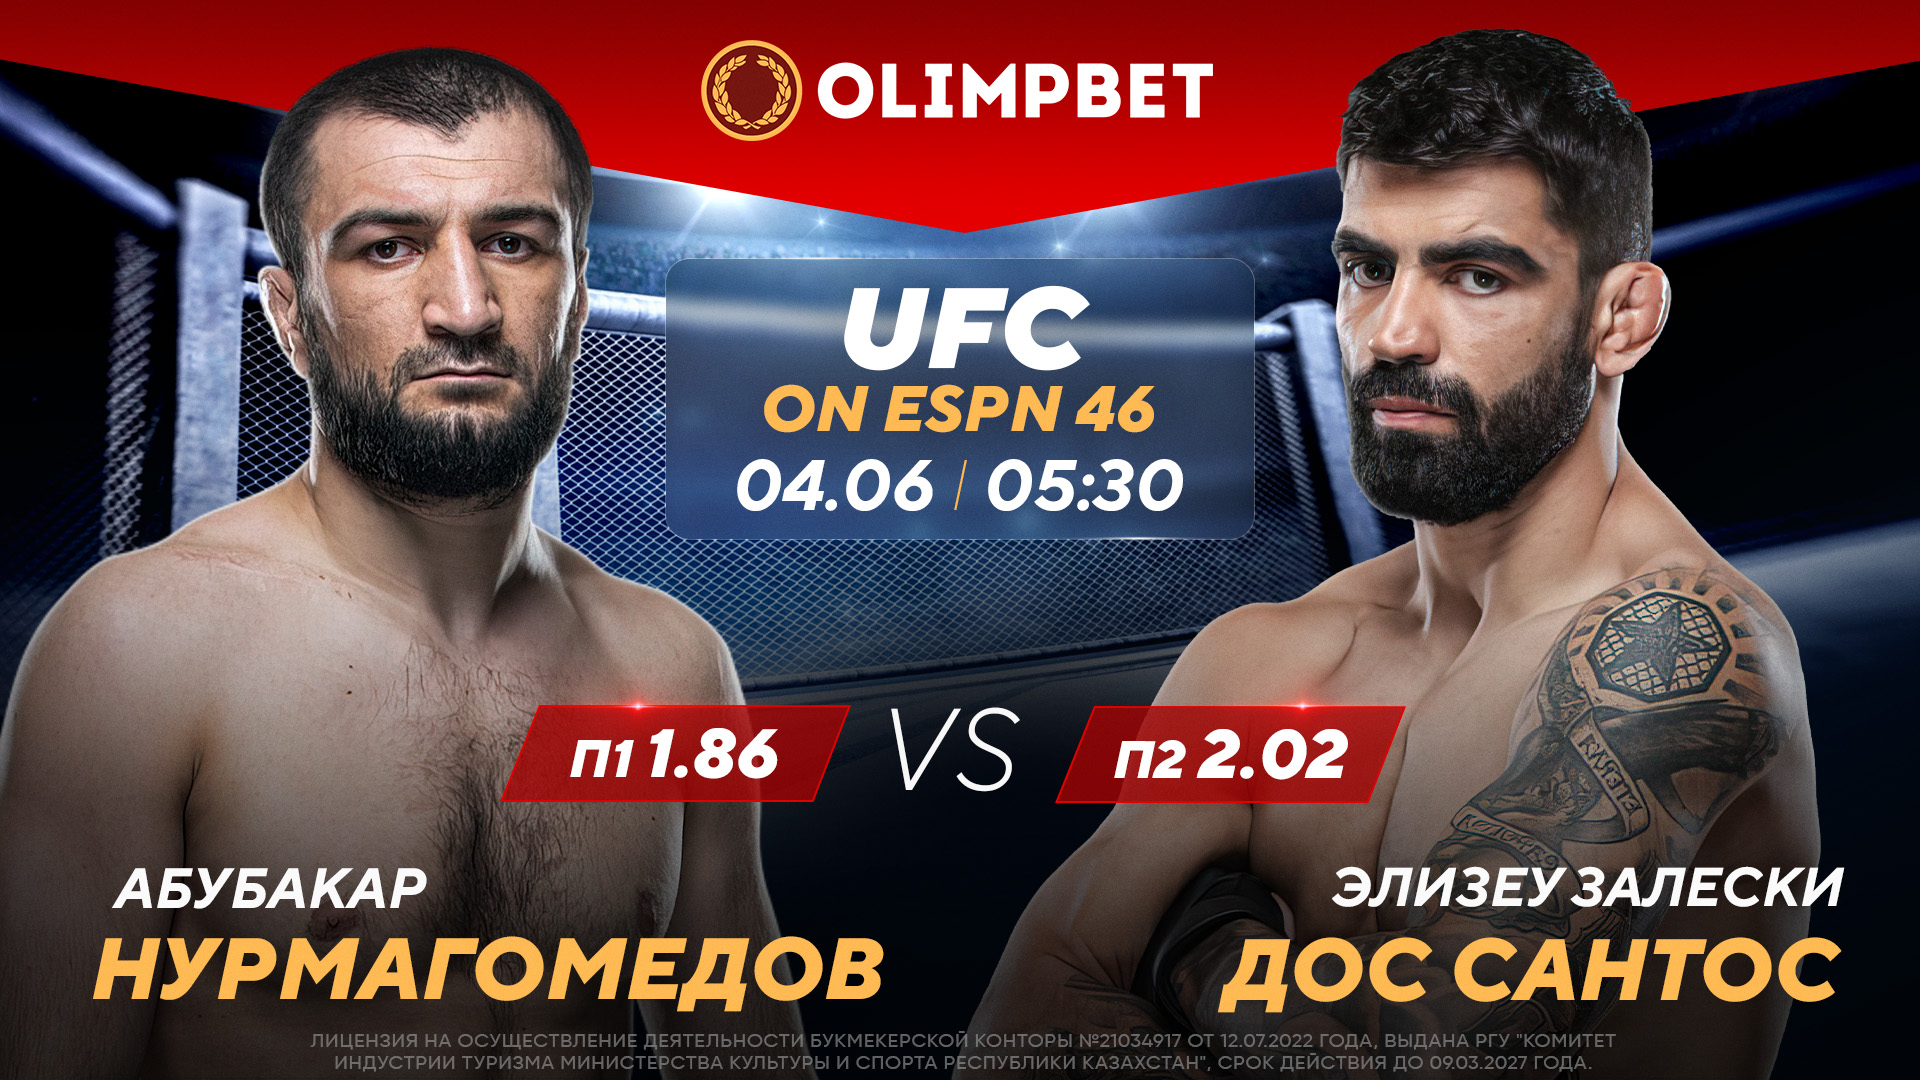 Брат Хабиба на UFC: расклады Olimpbet к поединку Абубакара Нурмагомедова 4 июня